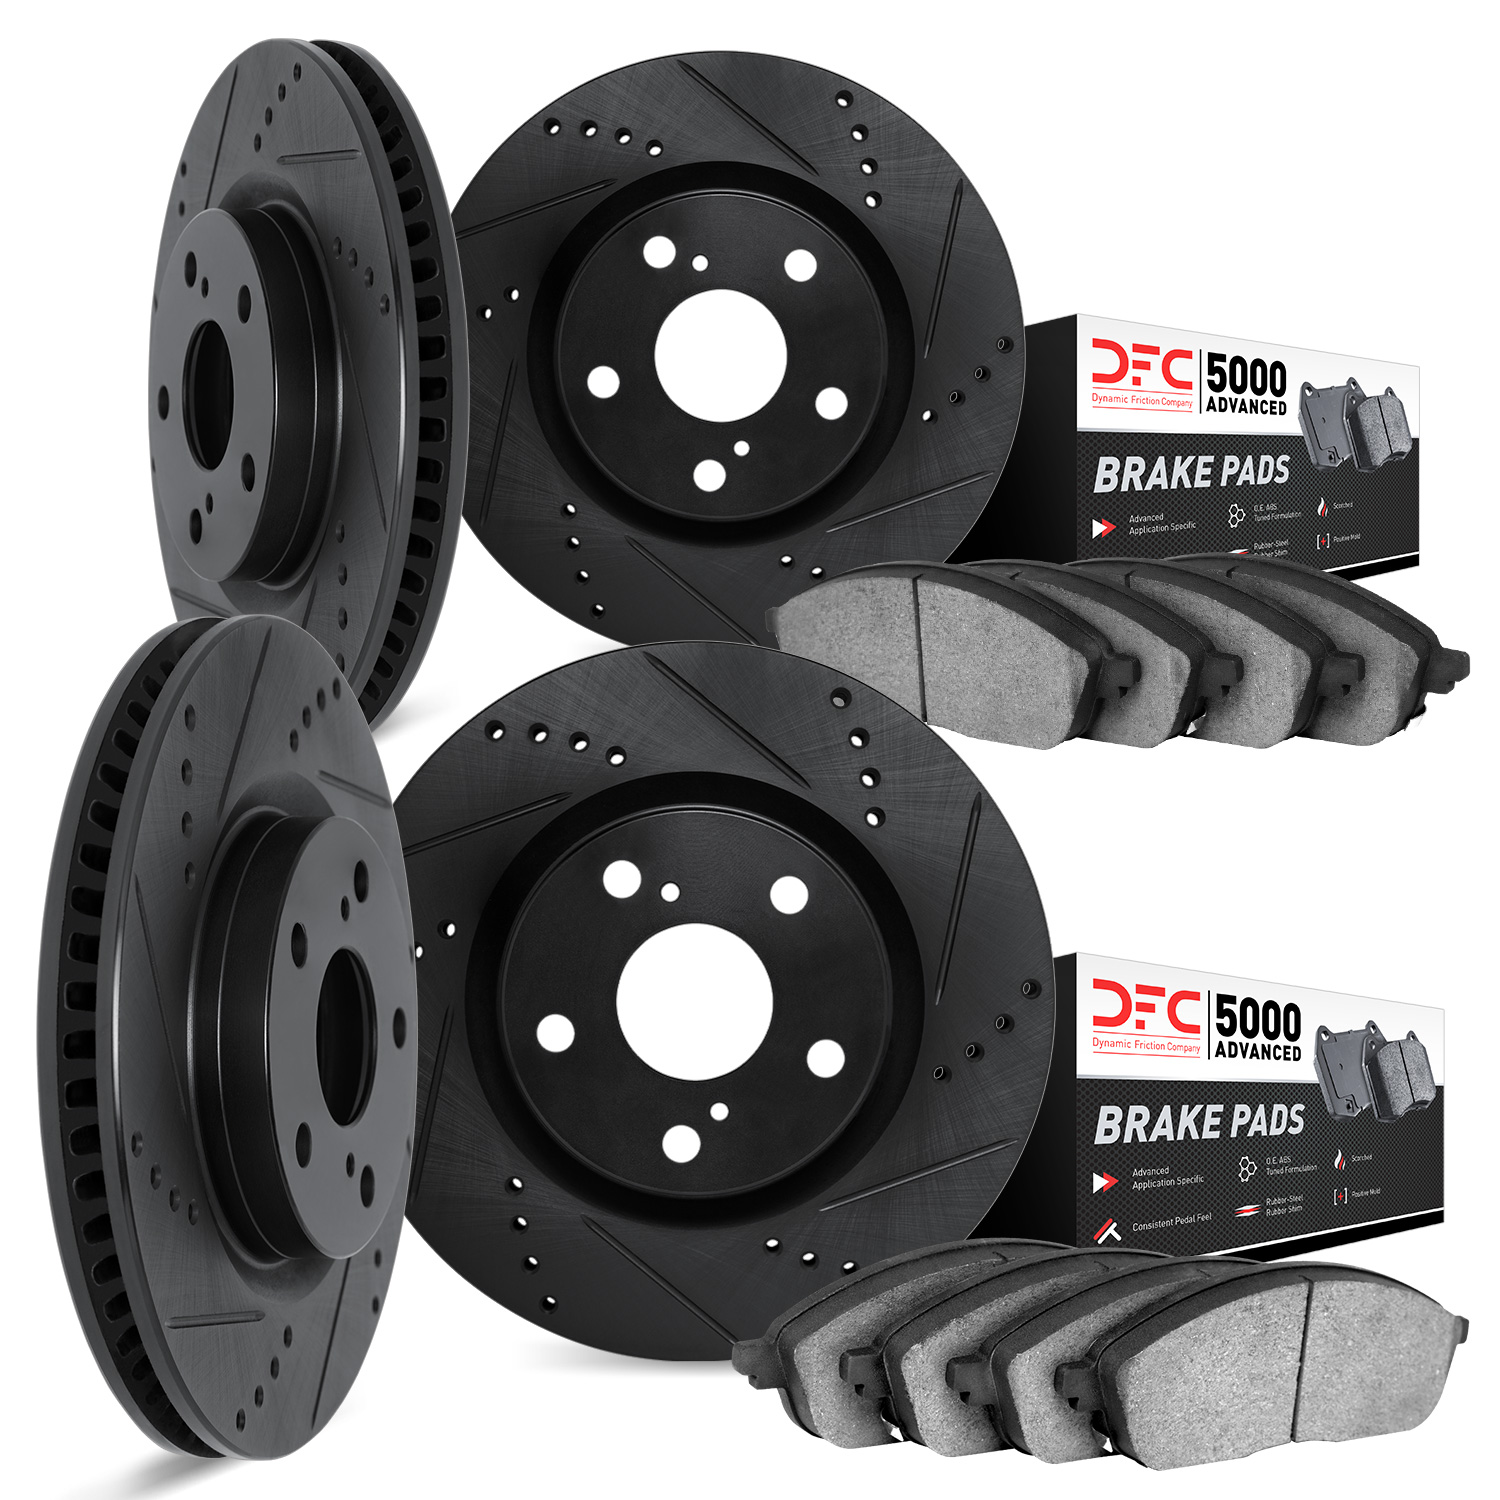 8504-54383 Drilled/Slotted Brake Rotors w/5000 Advanced Brake Pads Kit [Black], 2013-2019 Ford/Lincoln/Mercury/Mazda, Position: